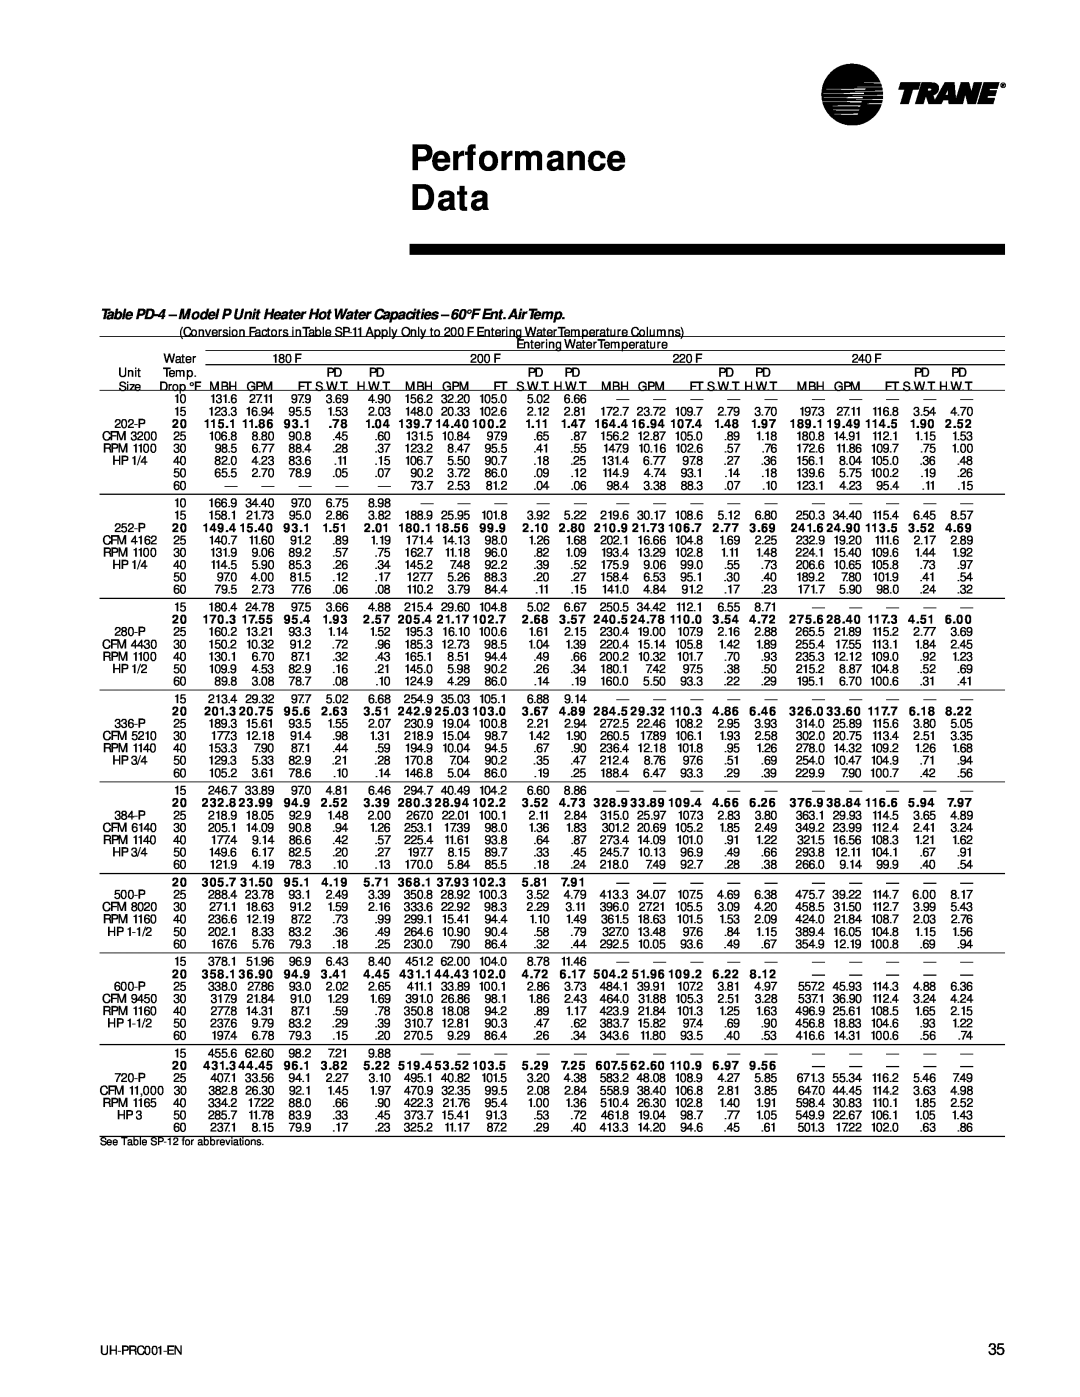 Trane UH-PRC001-EN manual Performance Data, 115.1 